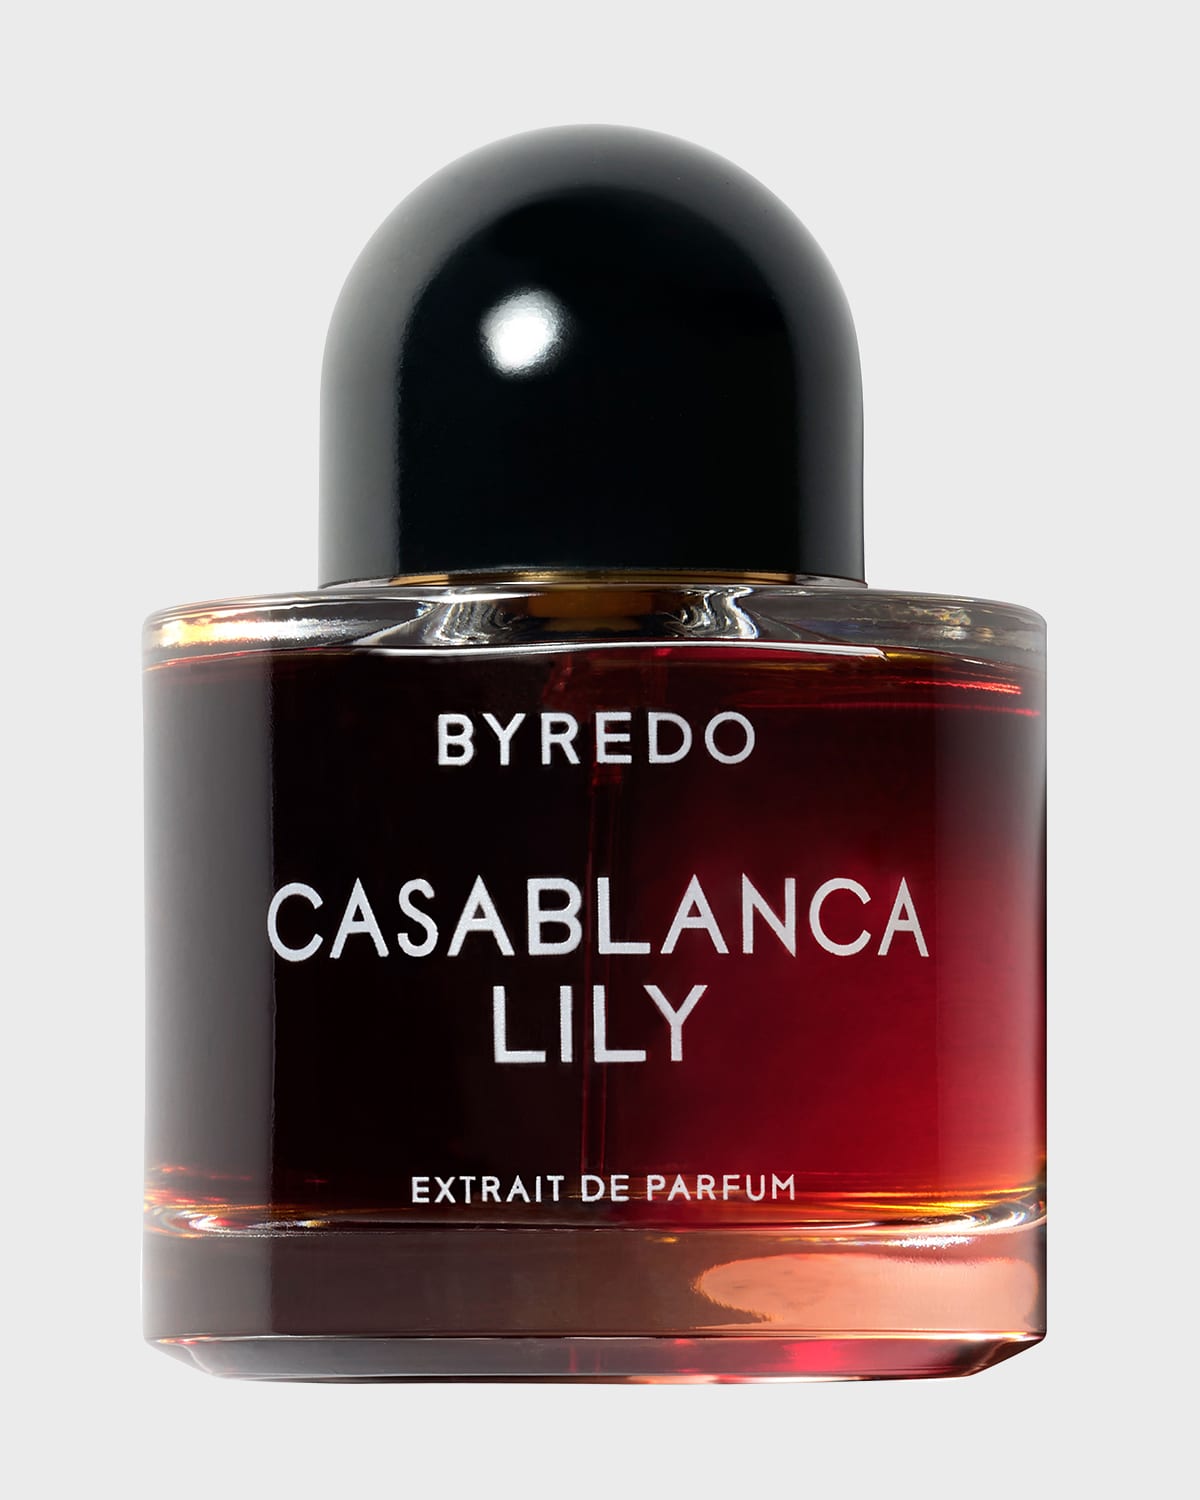 Casablanca Lily Night Veils Eau de Parfum, 1.7 oz.